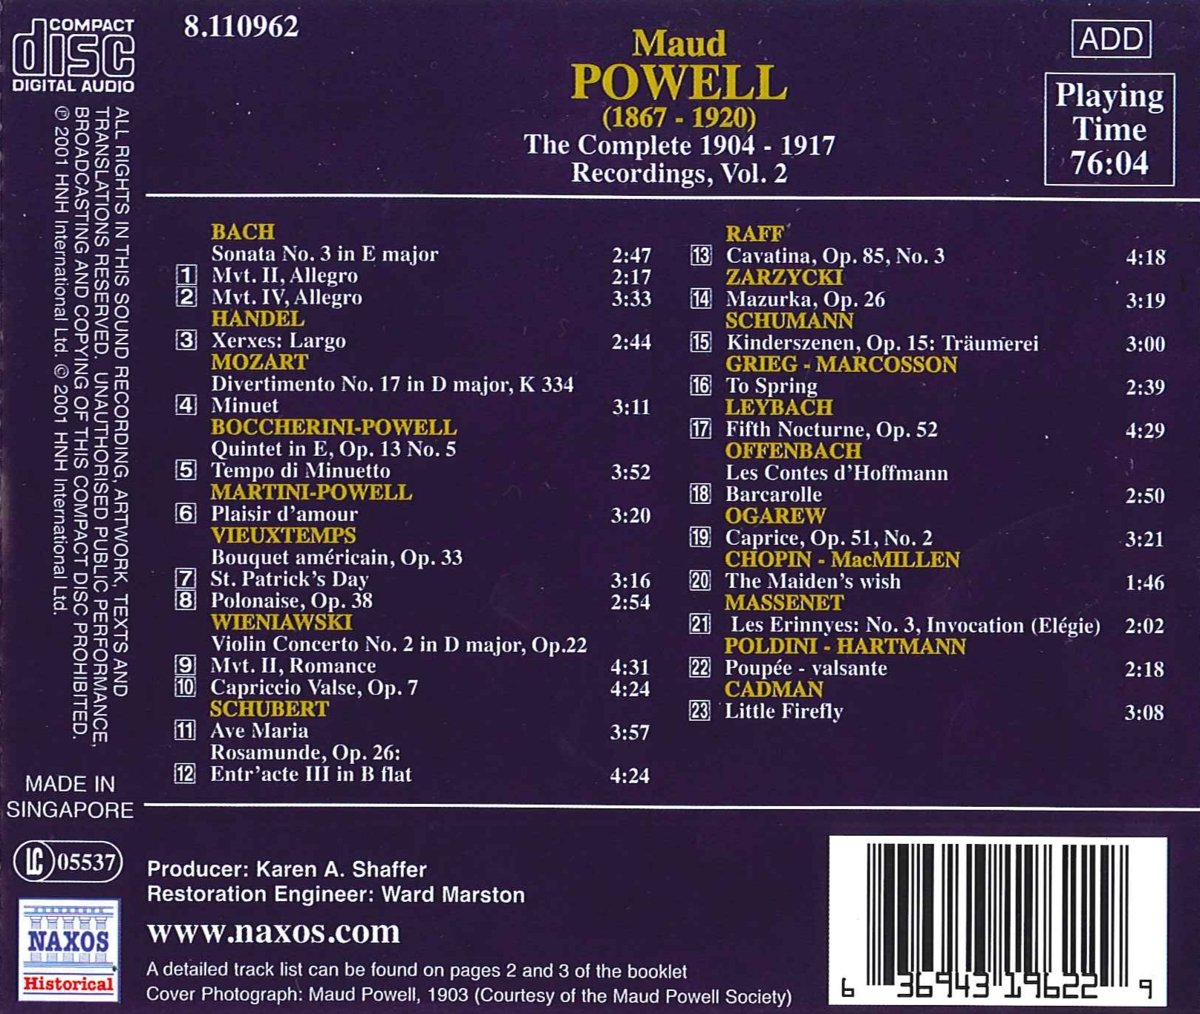 Maud Powell - Complete Recordings 1904-17, Vol 2 - slide-1